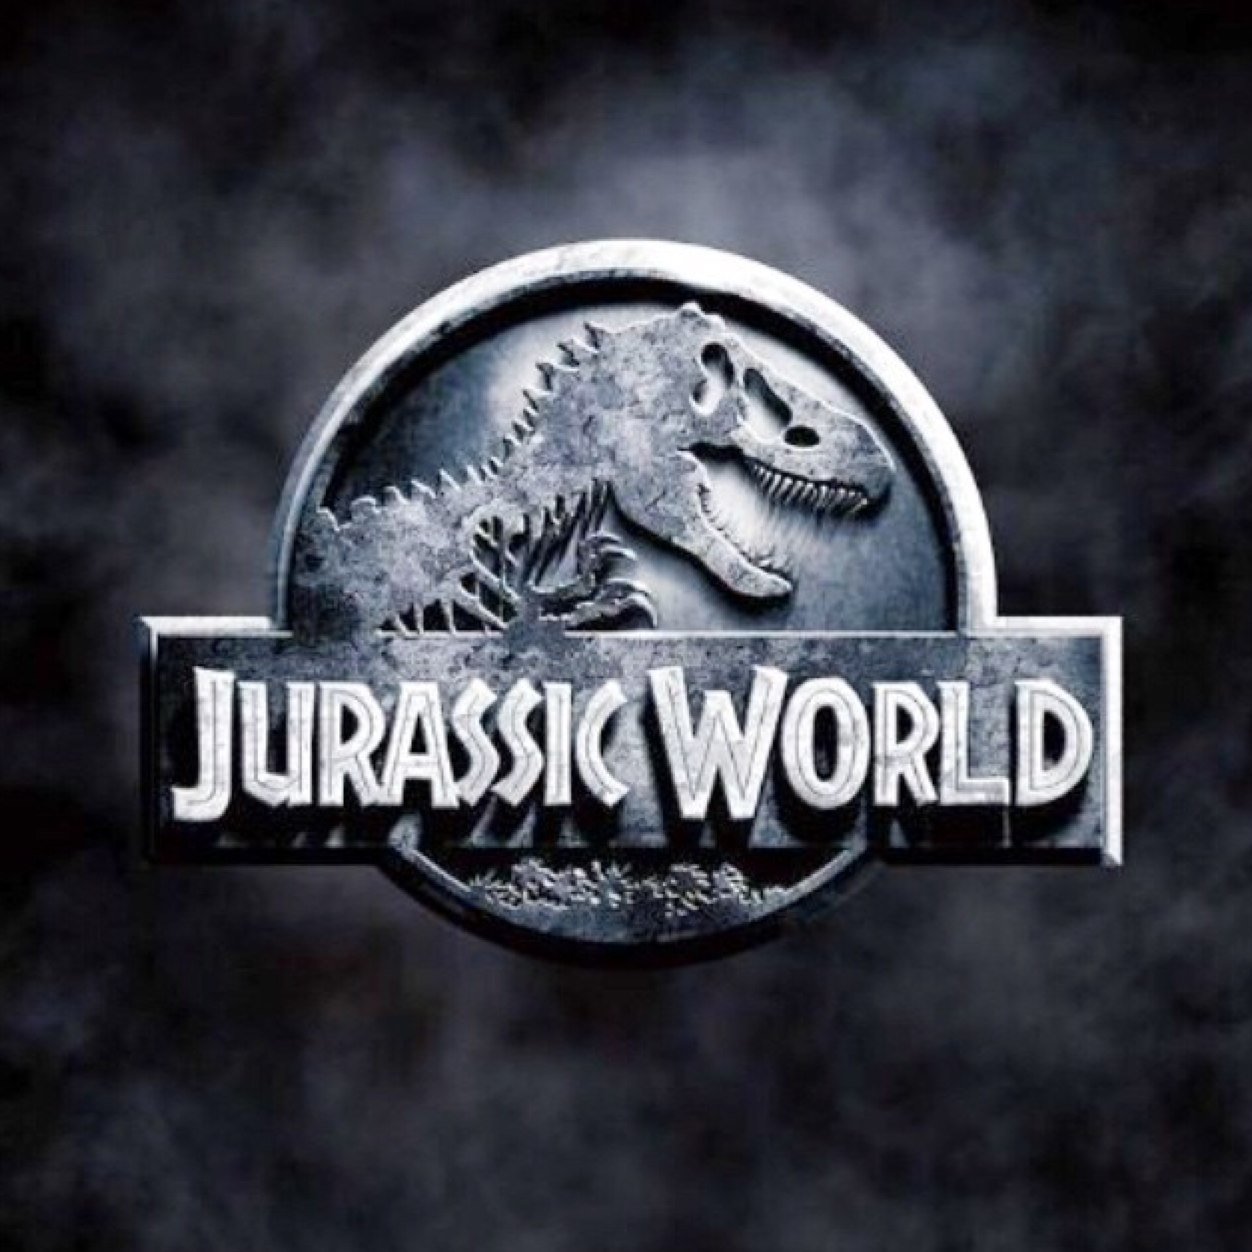 all the updates, news, info and gossip of the jurassic world movie premiering next summer JW: 199 days ☻